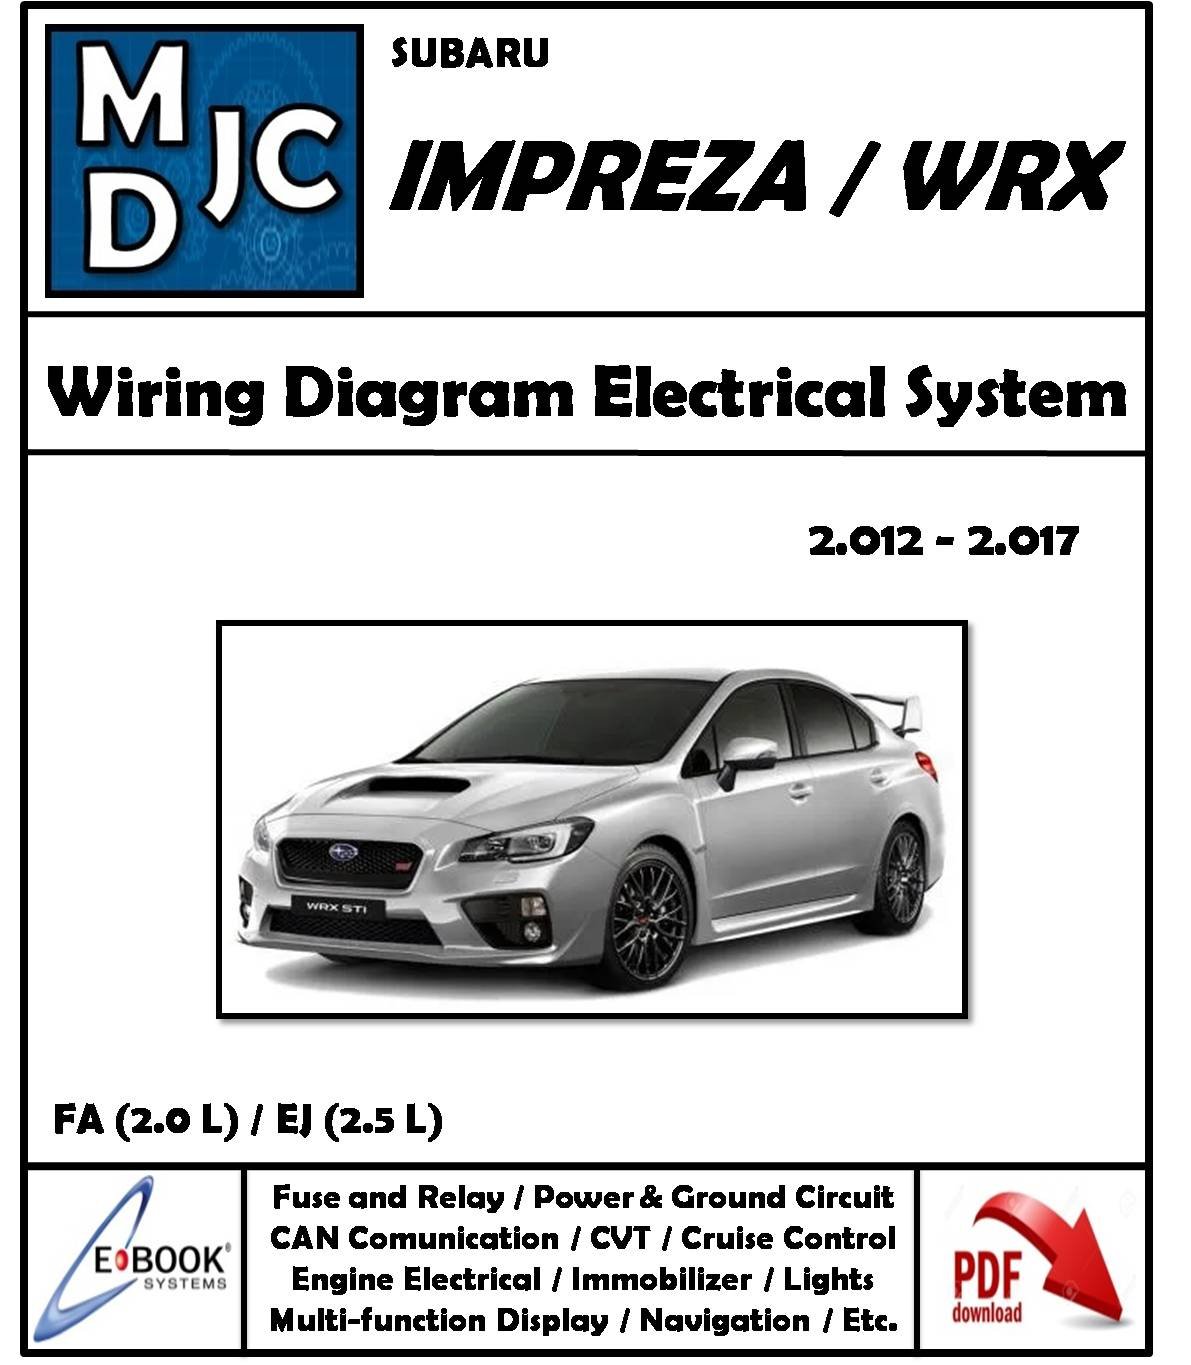 Subaru Impreza WRX 2012 - 2017